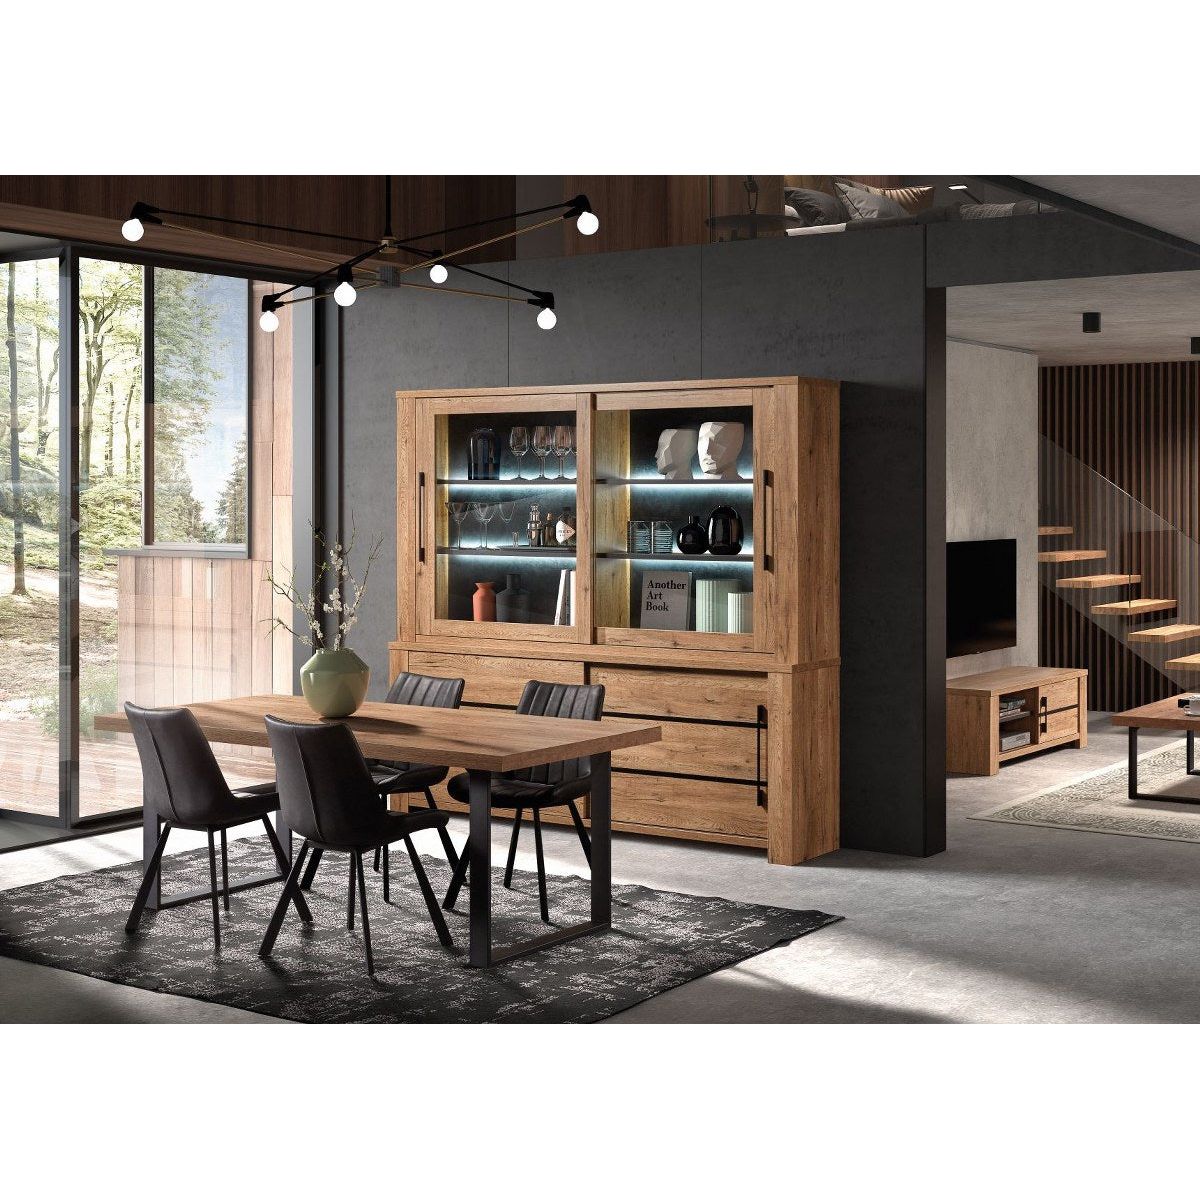 TV cabinet | Furniture series Basto | brown, natural | 150x48x